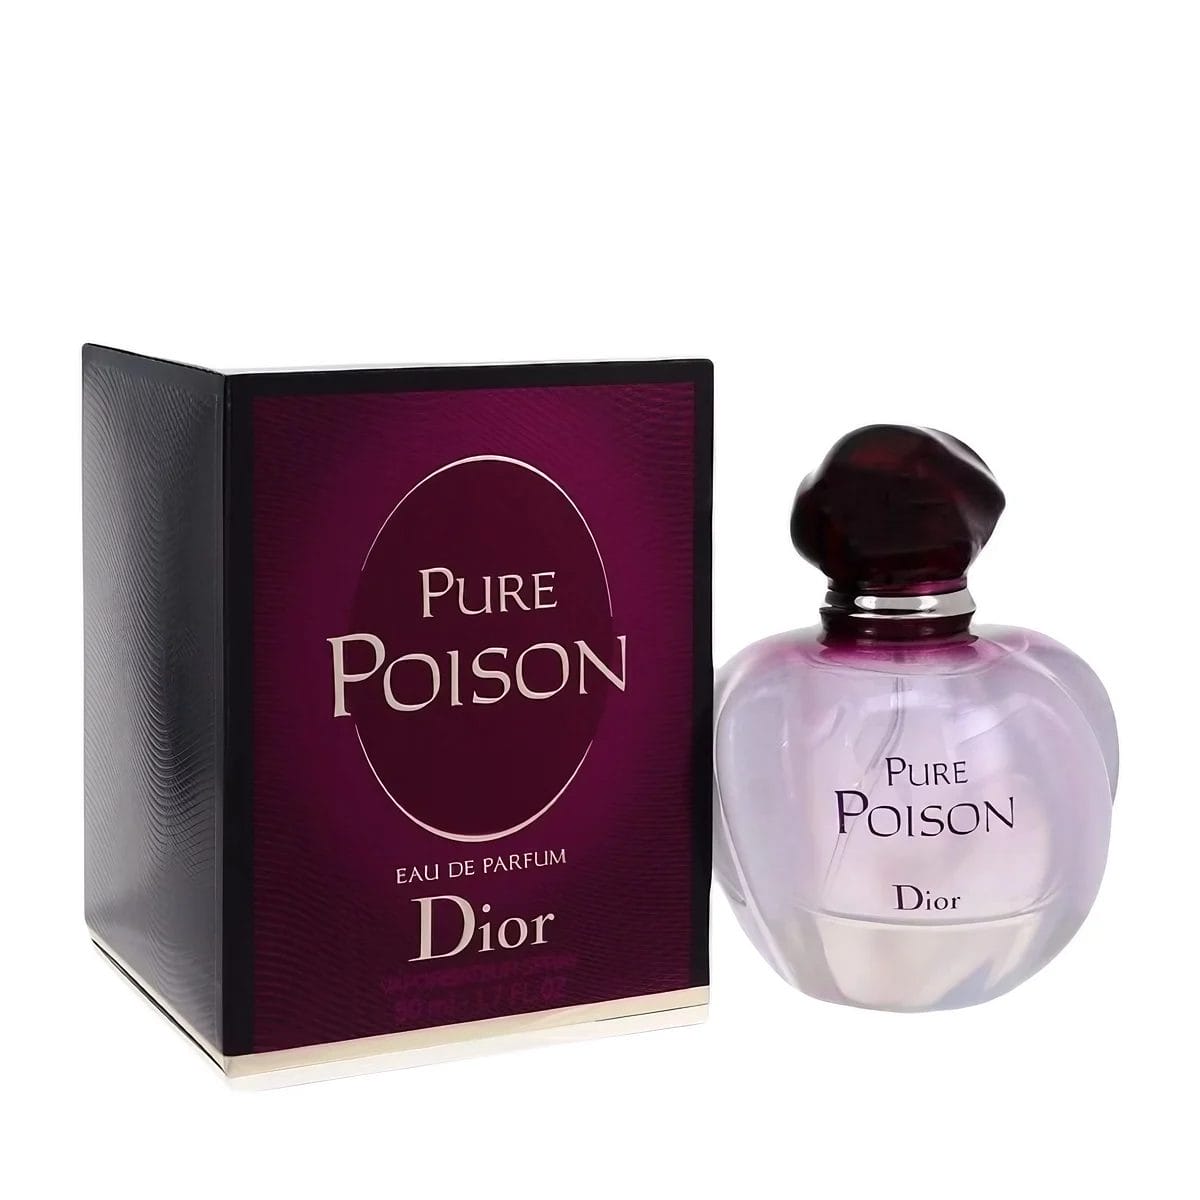 Agua de perfume Dior Pure Poison